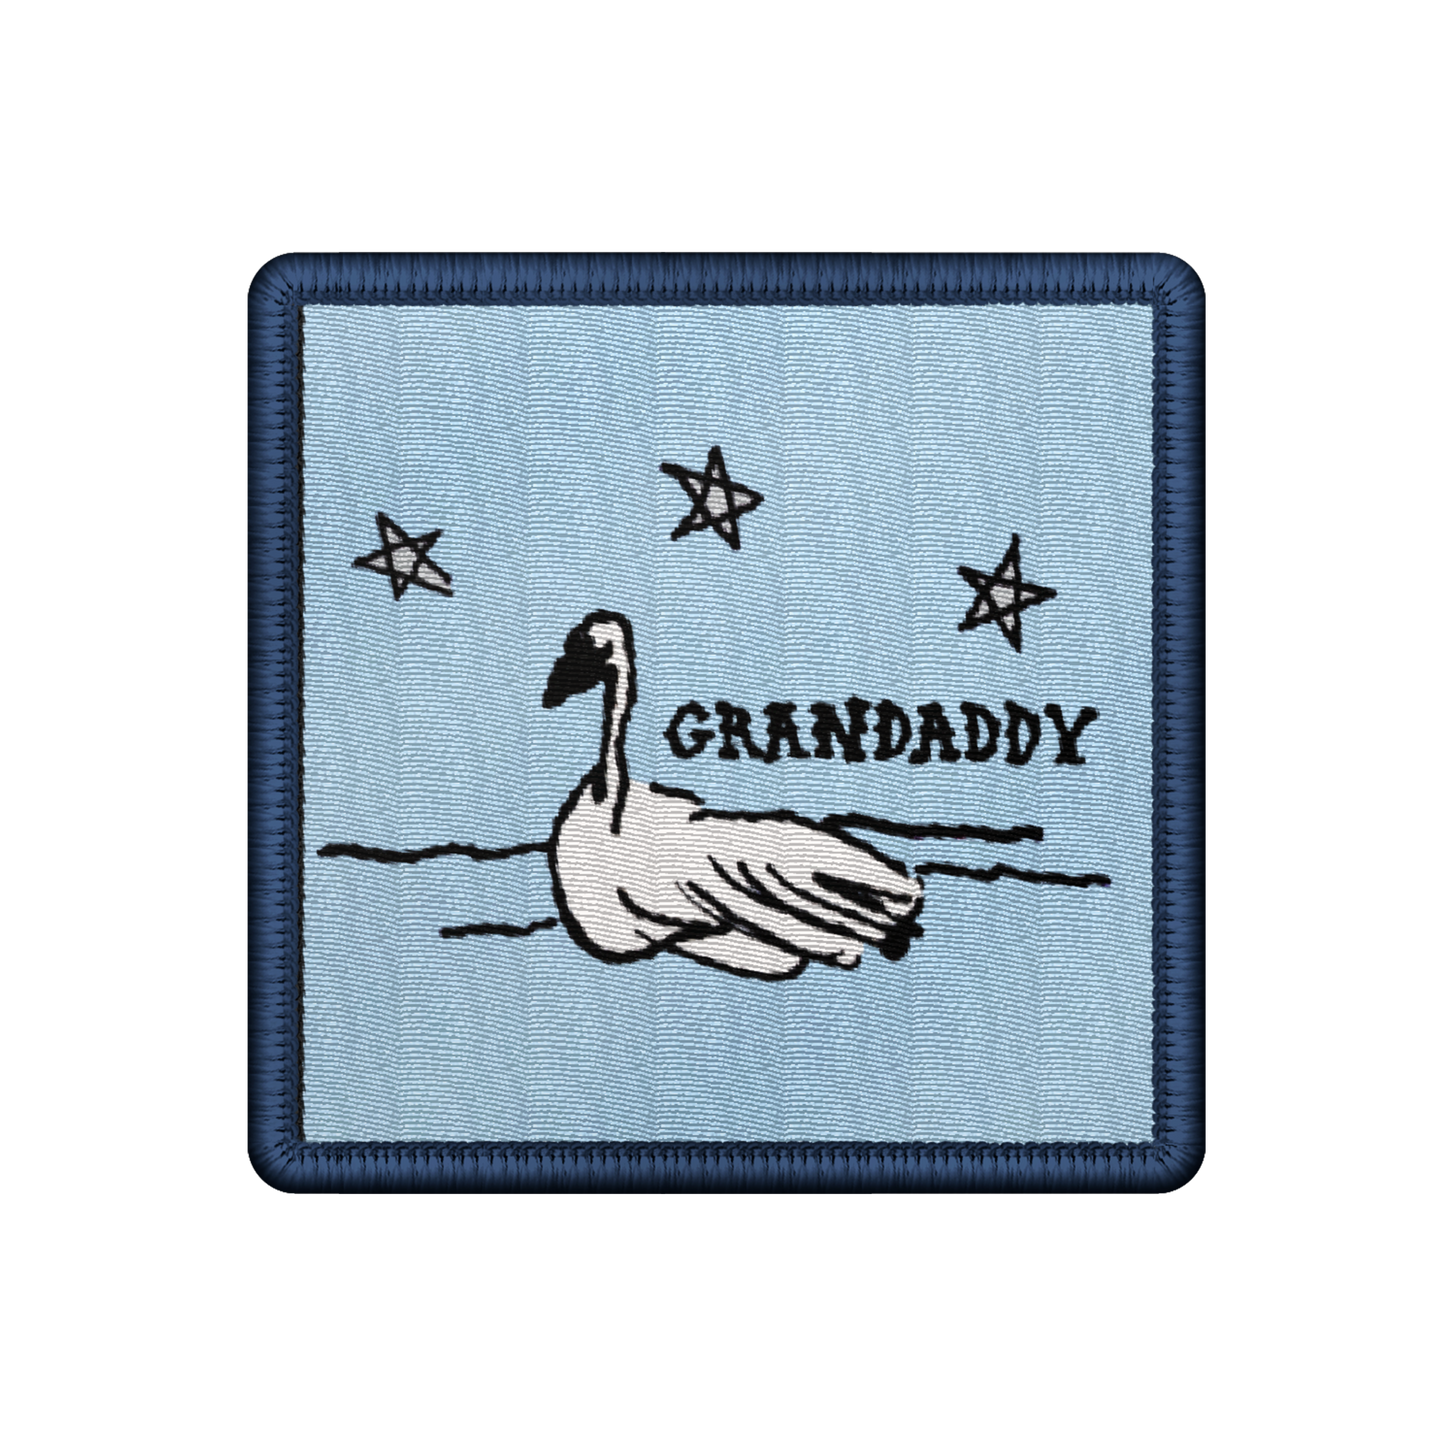 Grandaddy - Sumday Twunny (20th Anniversary Collection) - 4 LP Box Set: Deluxe Bundle